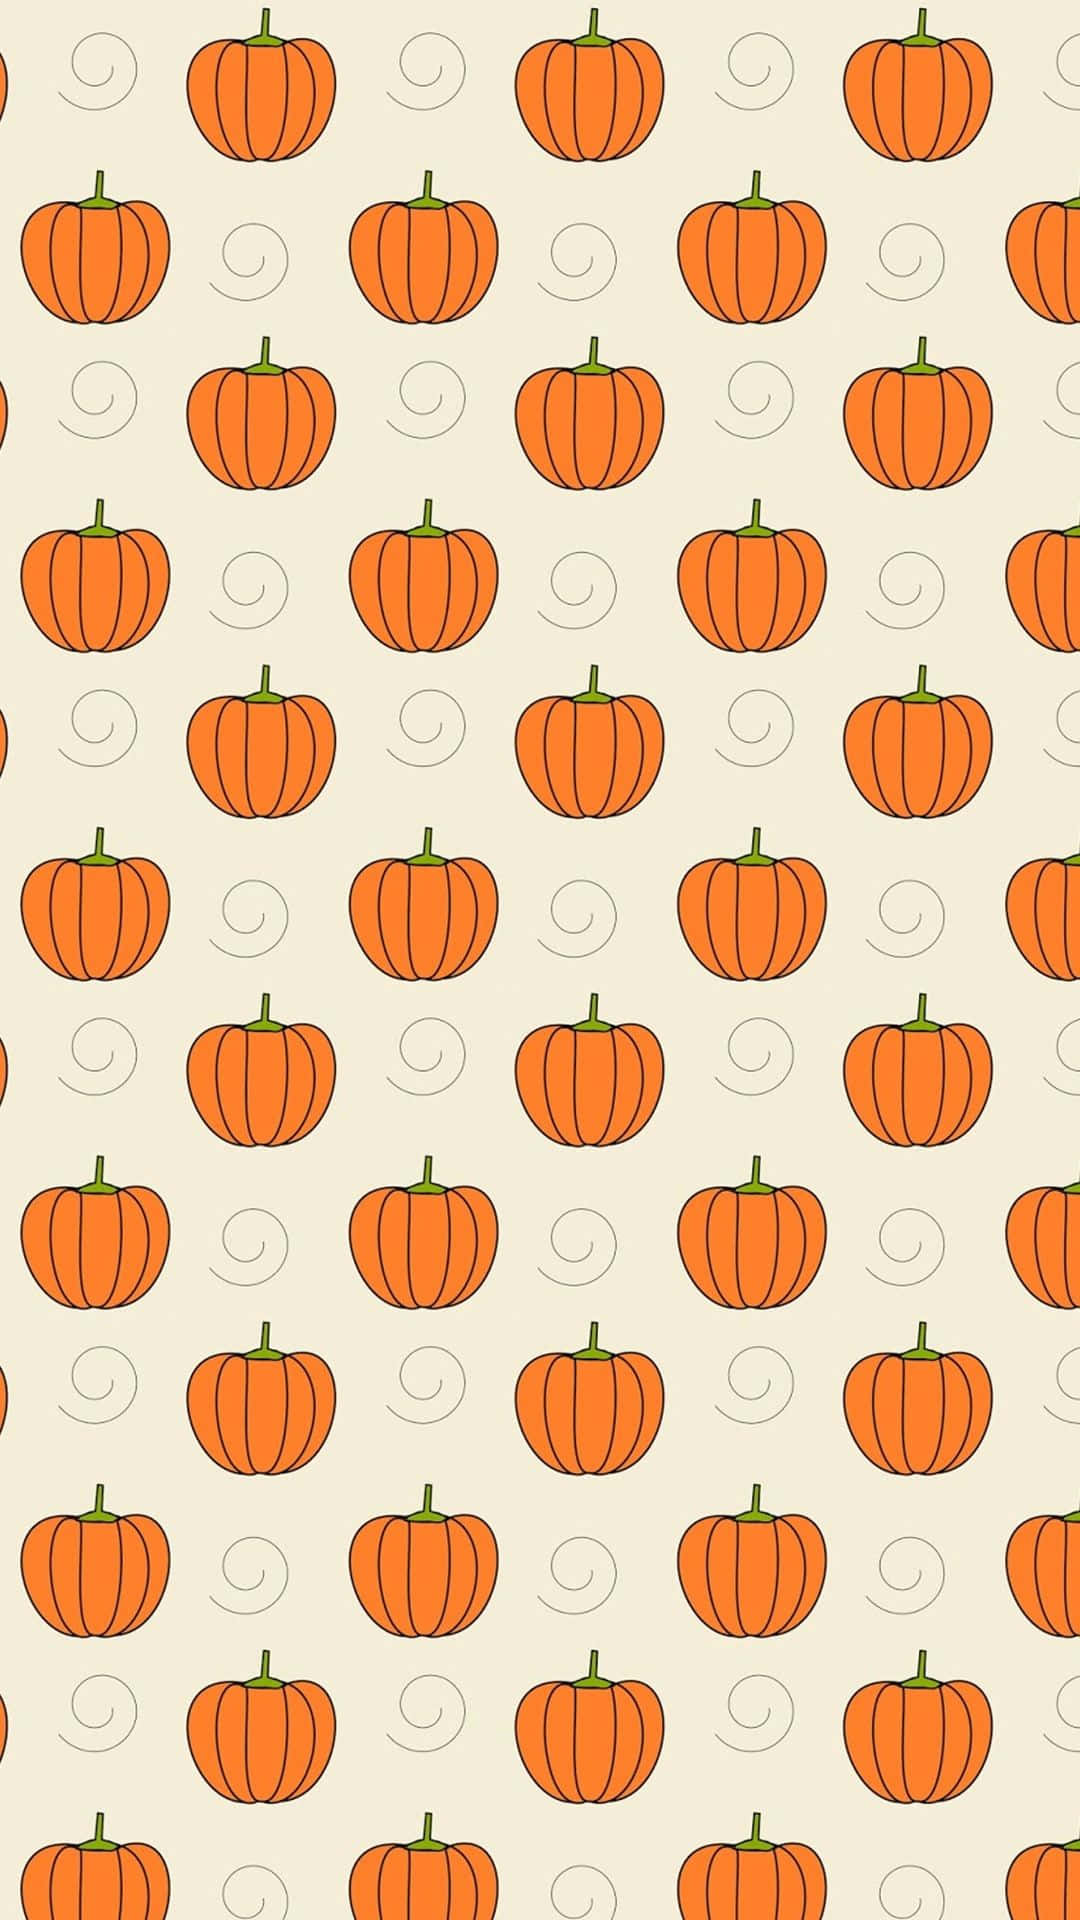 Sfondodi Halloween Per Iphone Con Pattern Di Zucche E Vortici